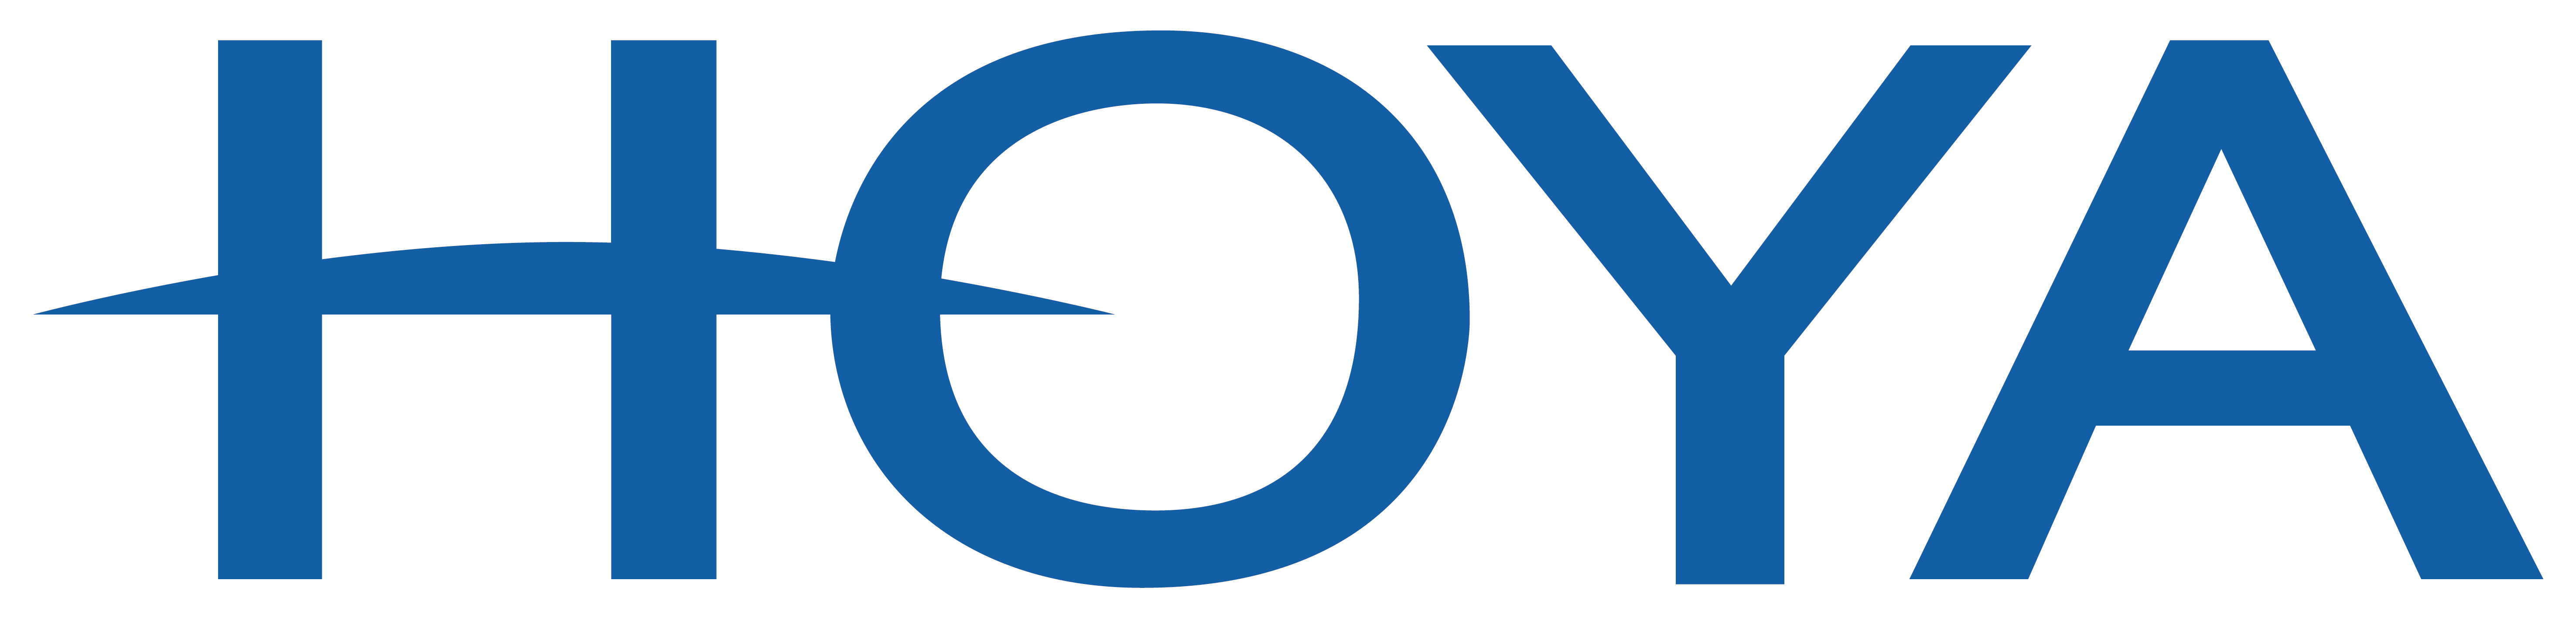 HOYA логотп бренда